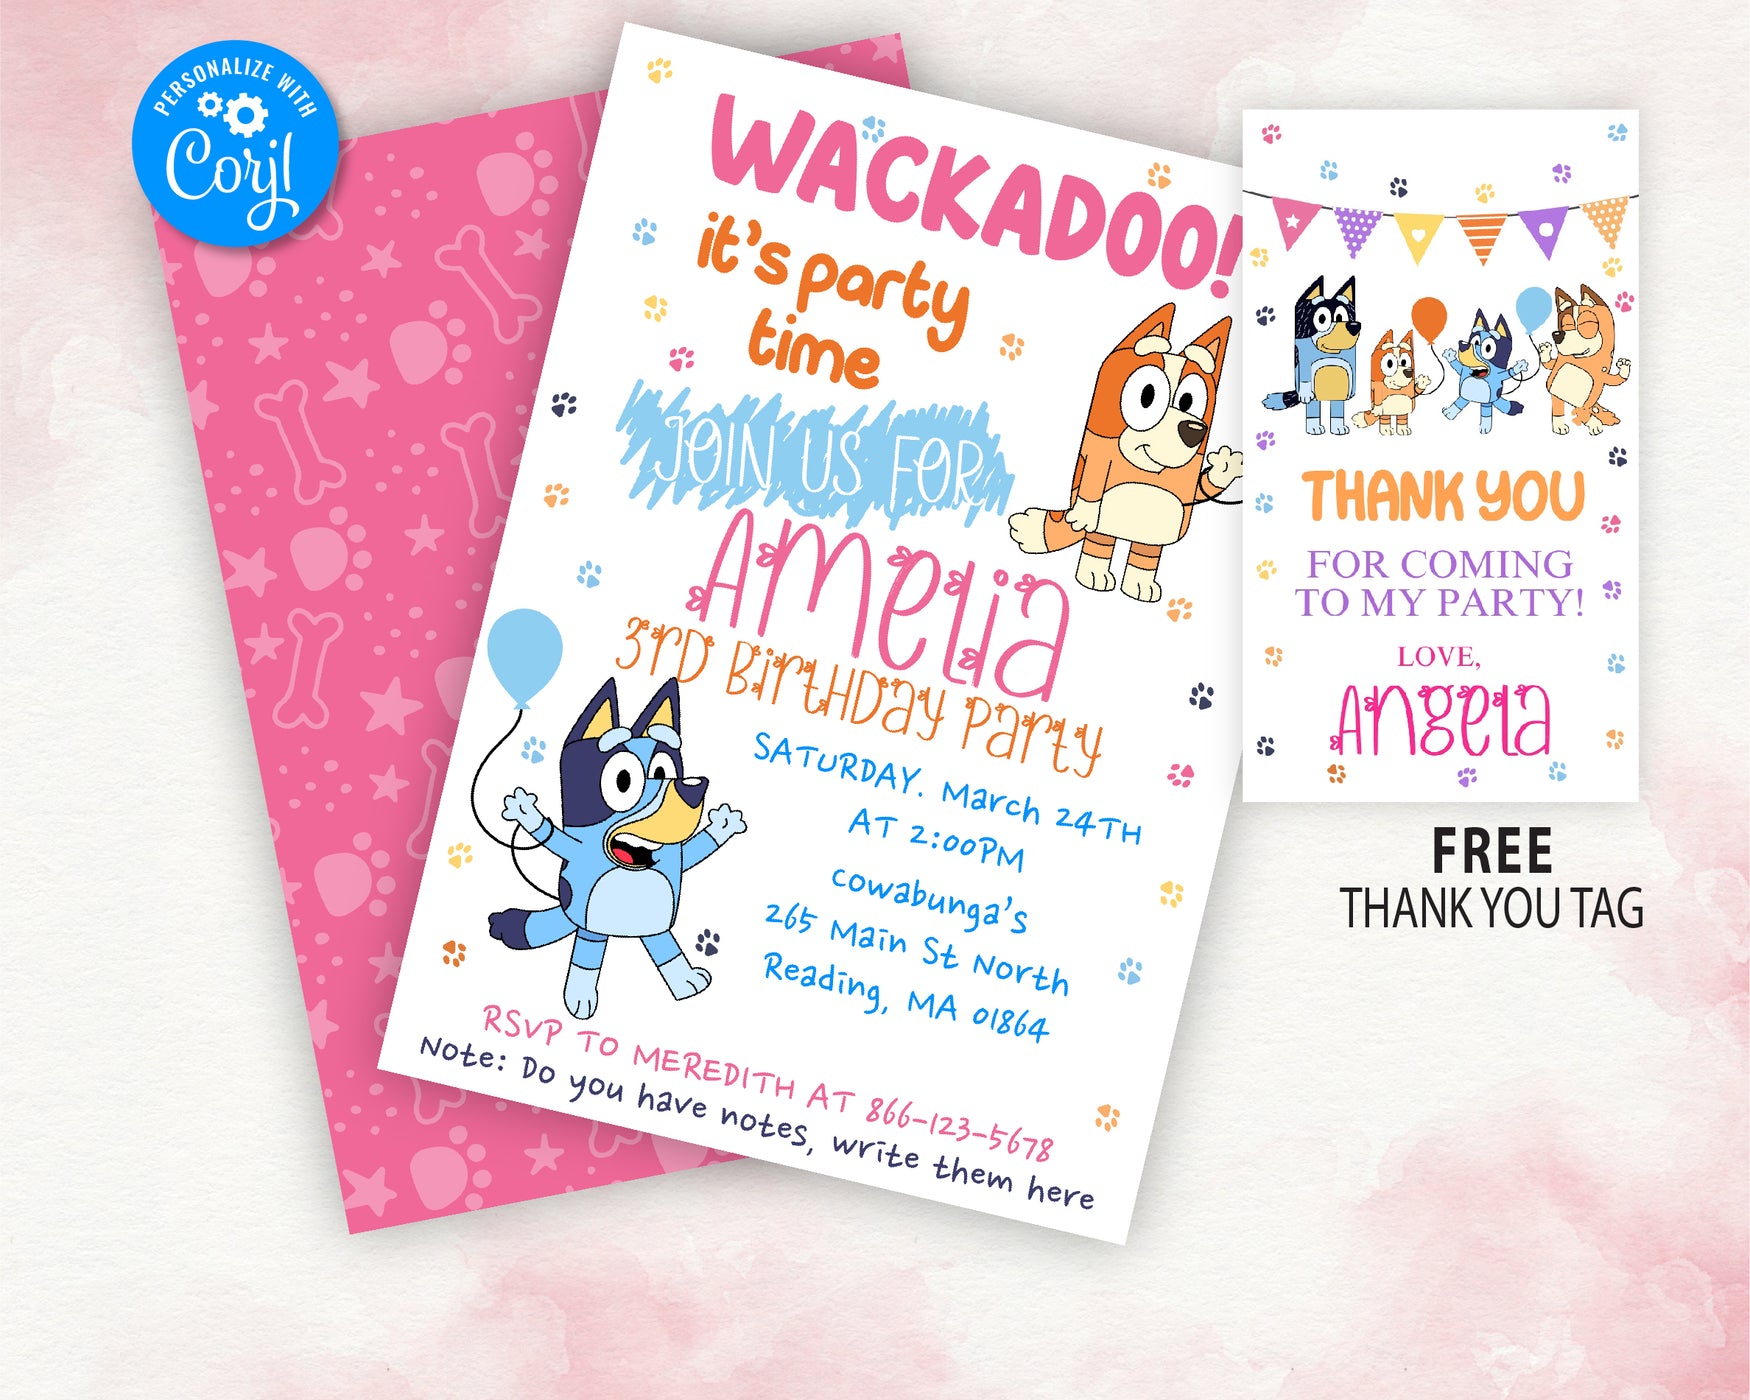 Bluey Birthday Invitation Template | Editable | Printable | Instant Download